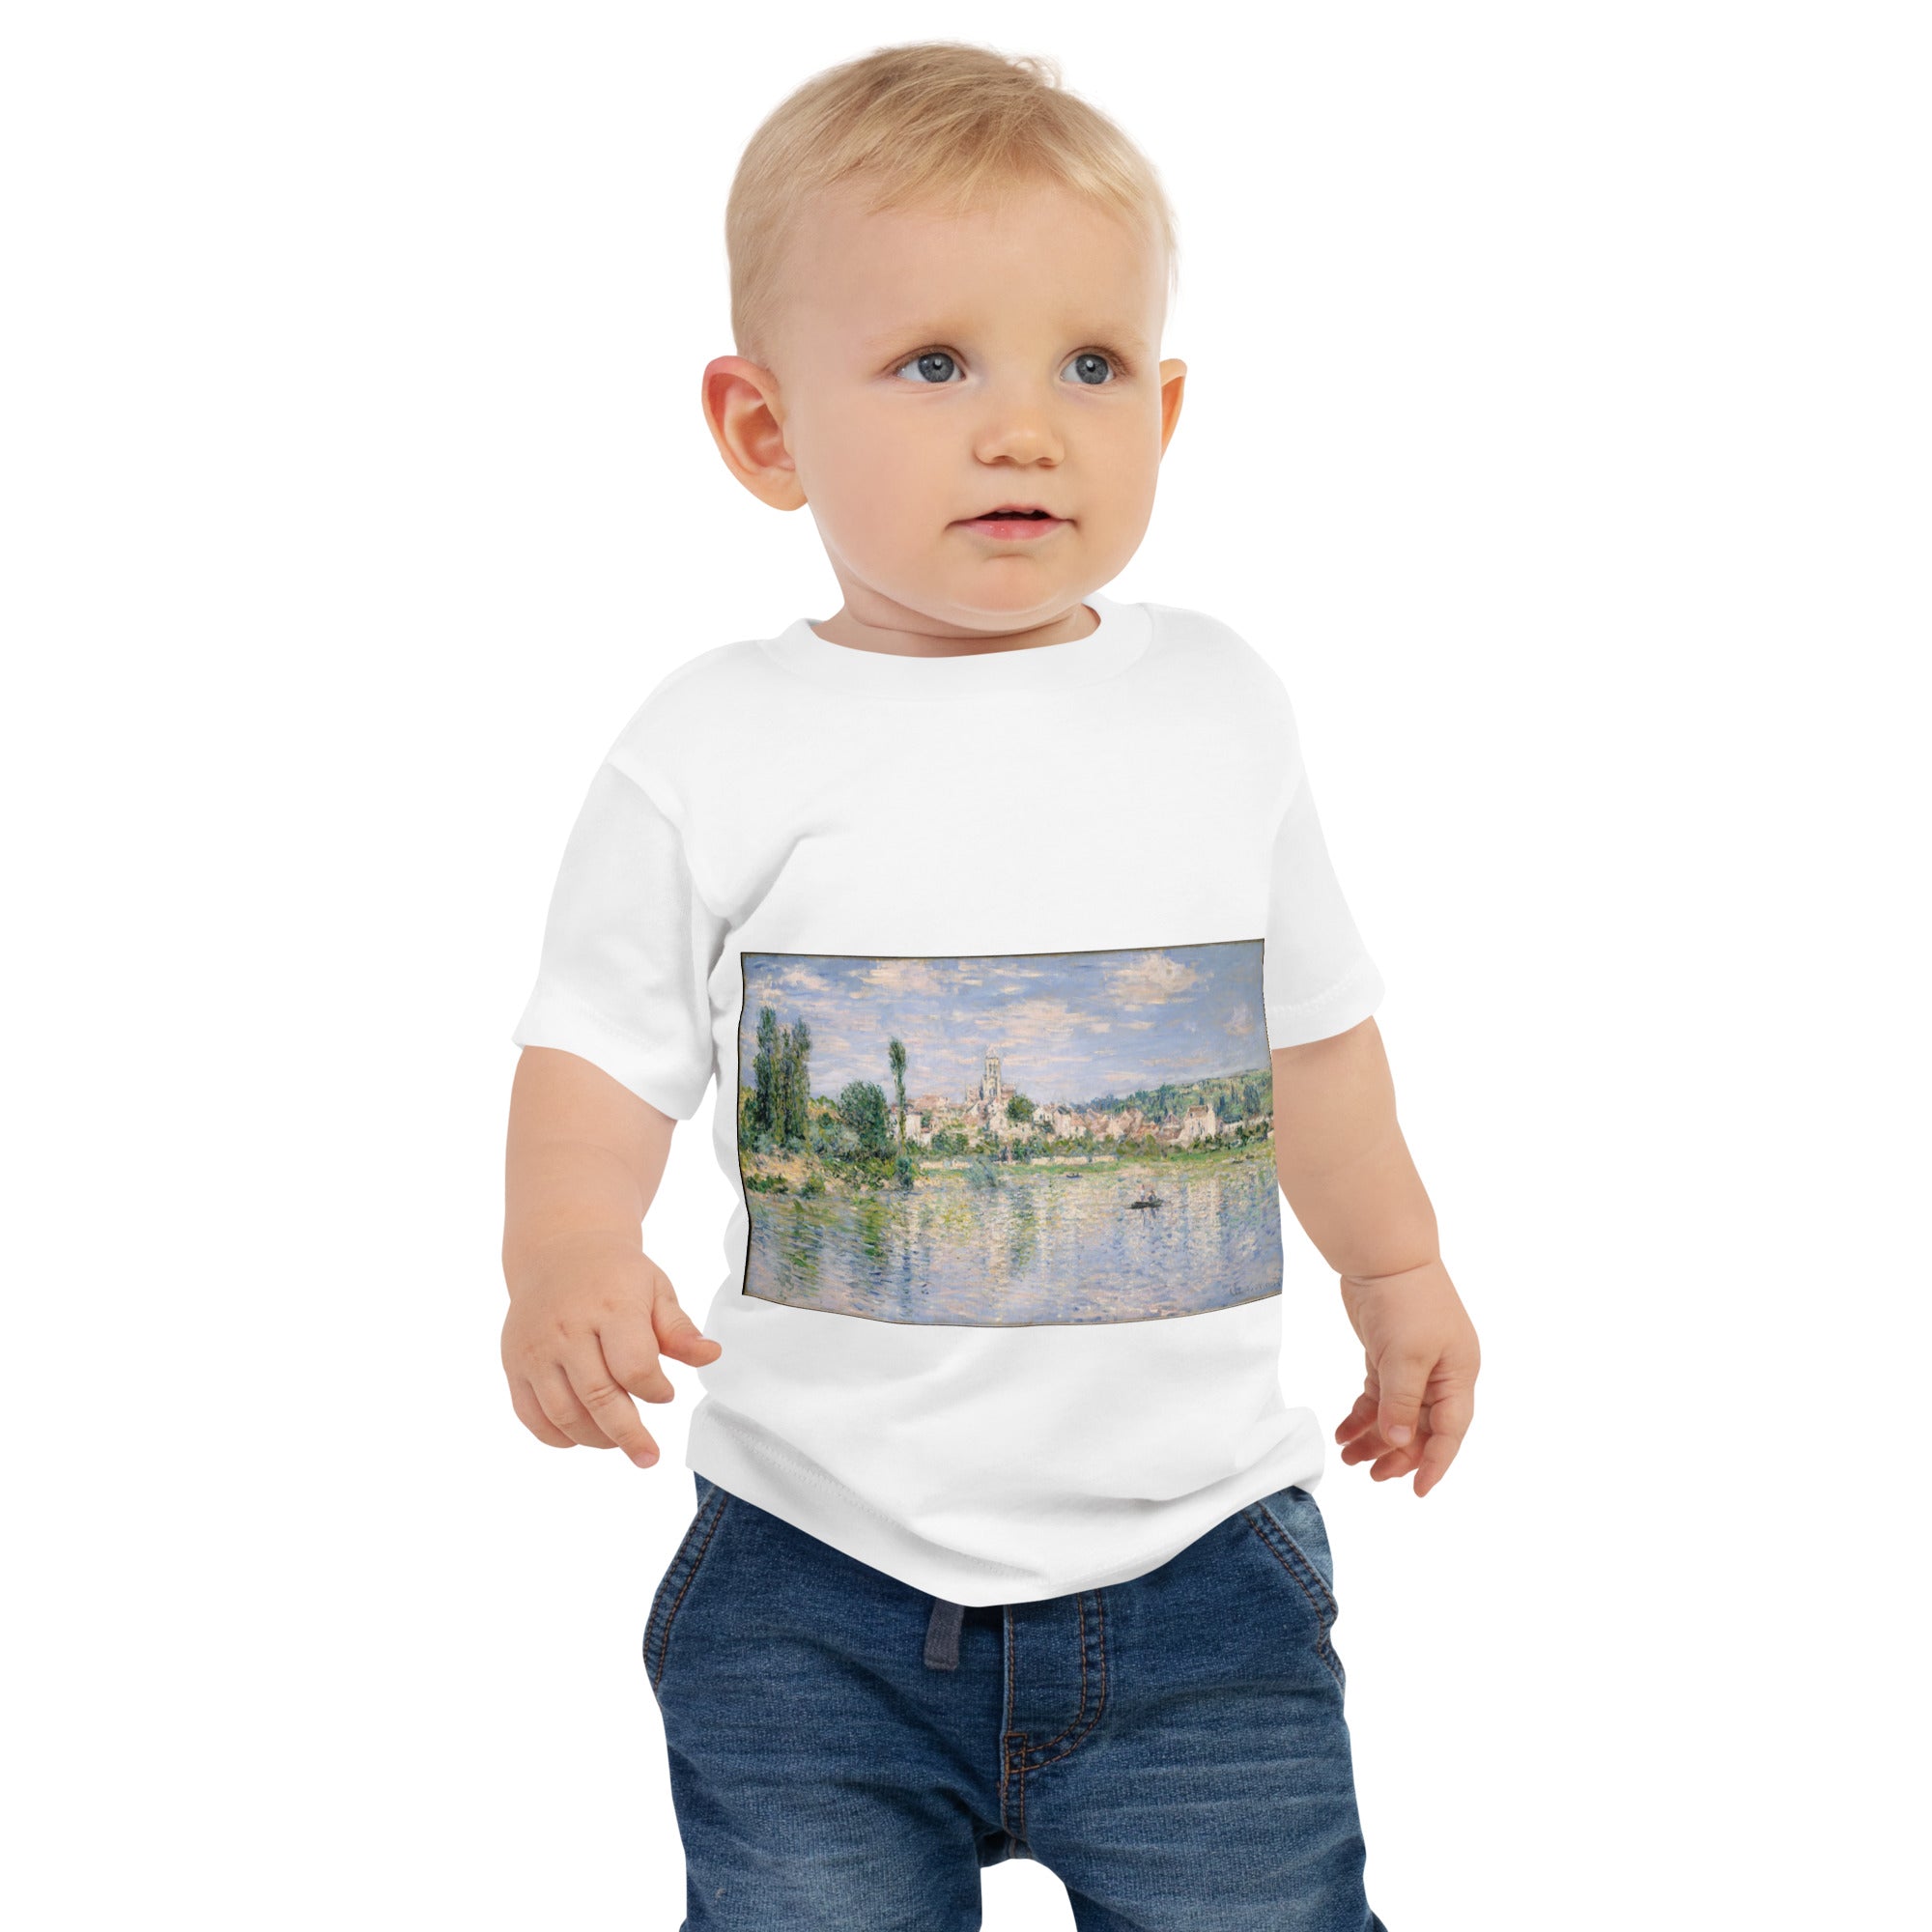 Claude Monet 'Vetheuil in Summer' Famous Painting Baby Staple T-Shirt | Premium Baby Art Tee